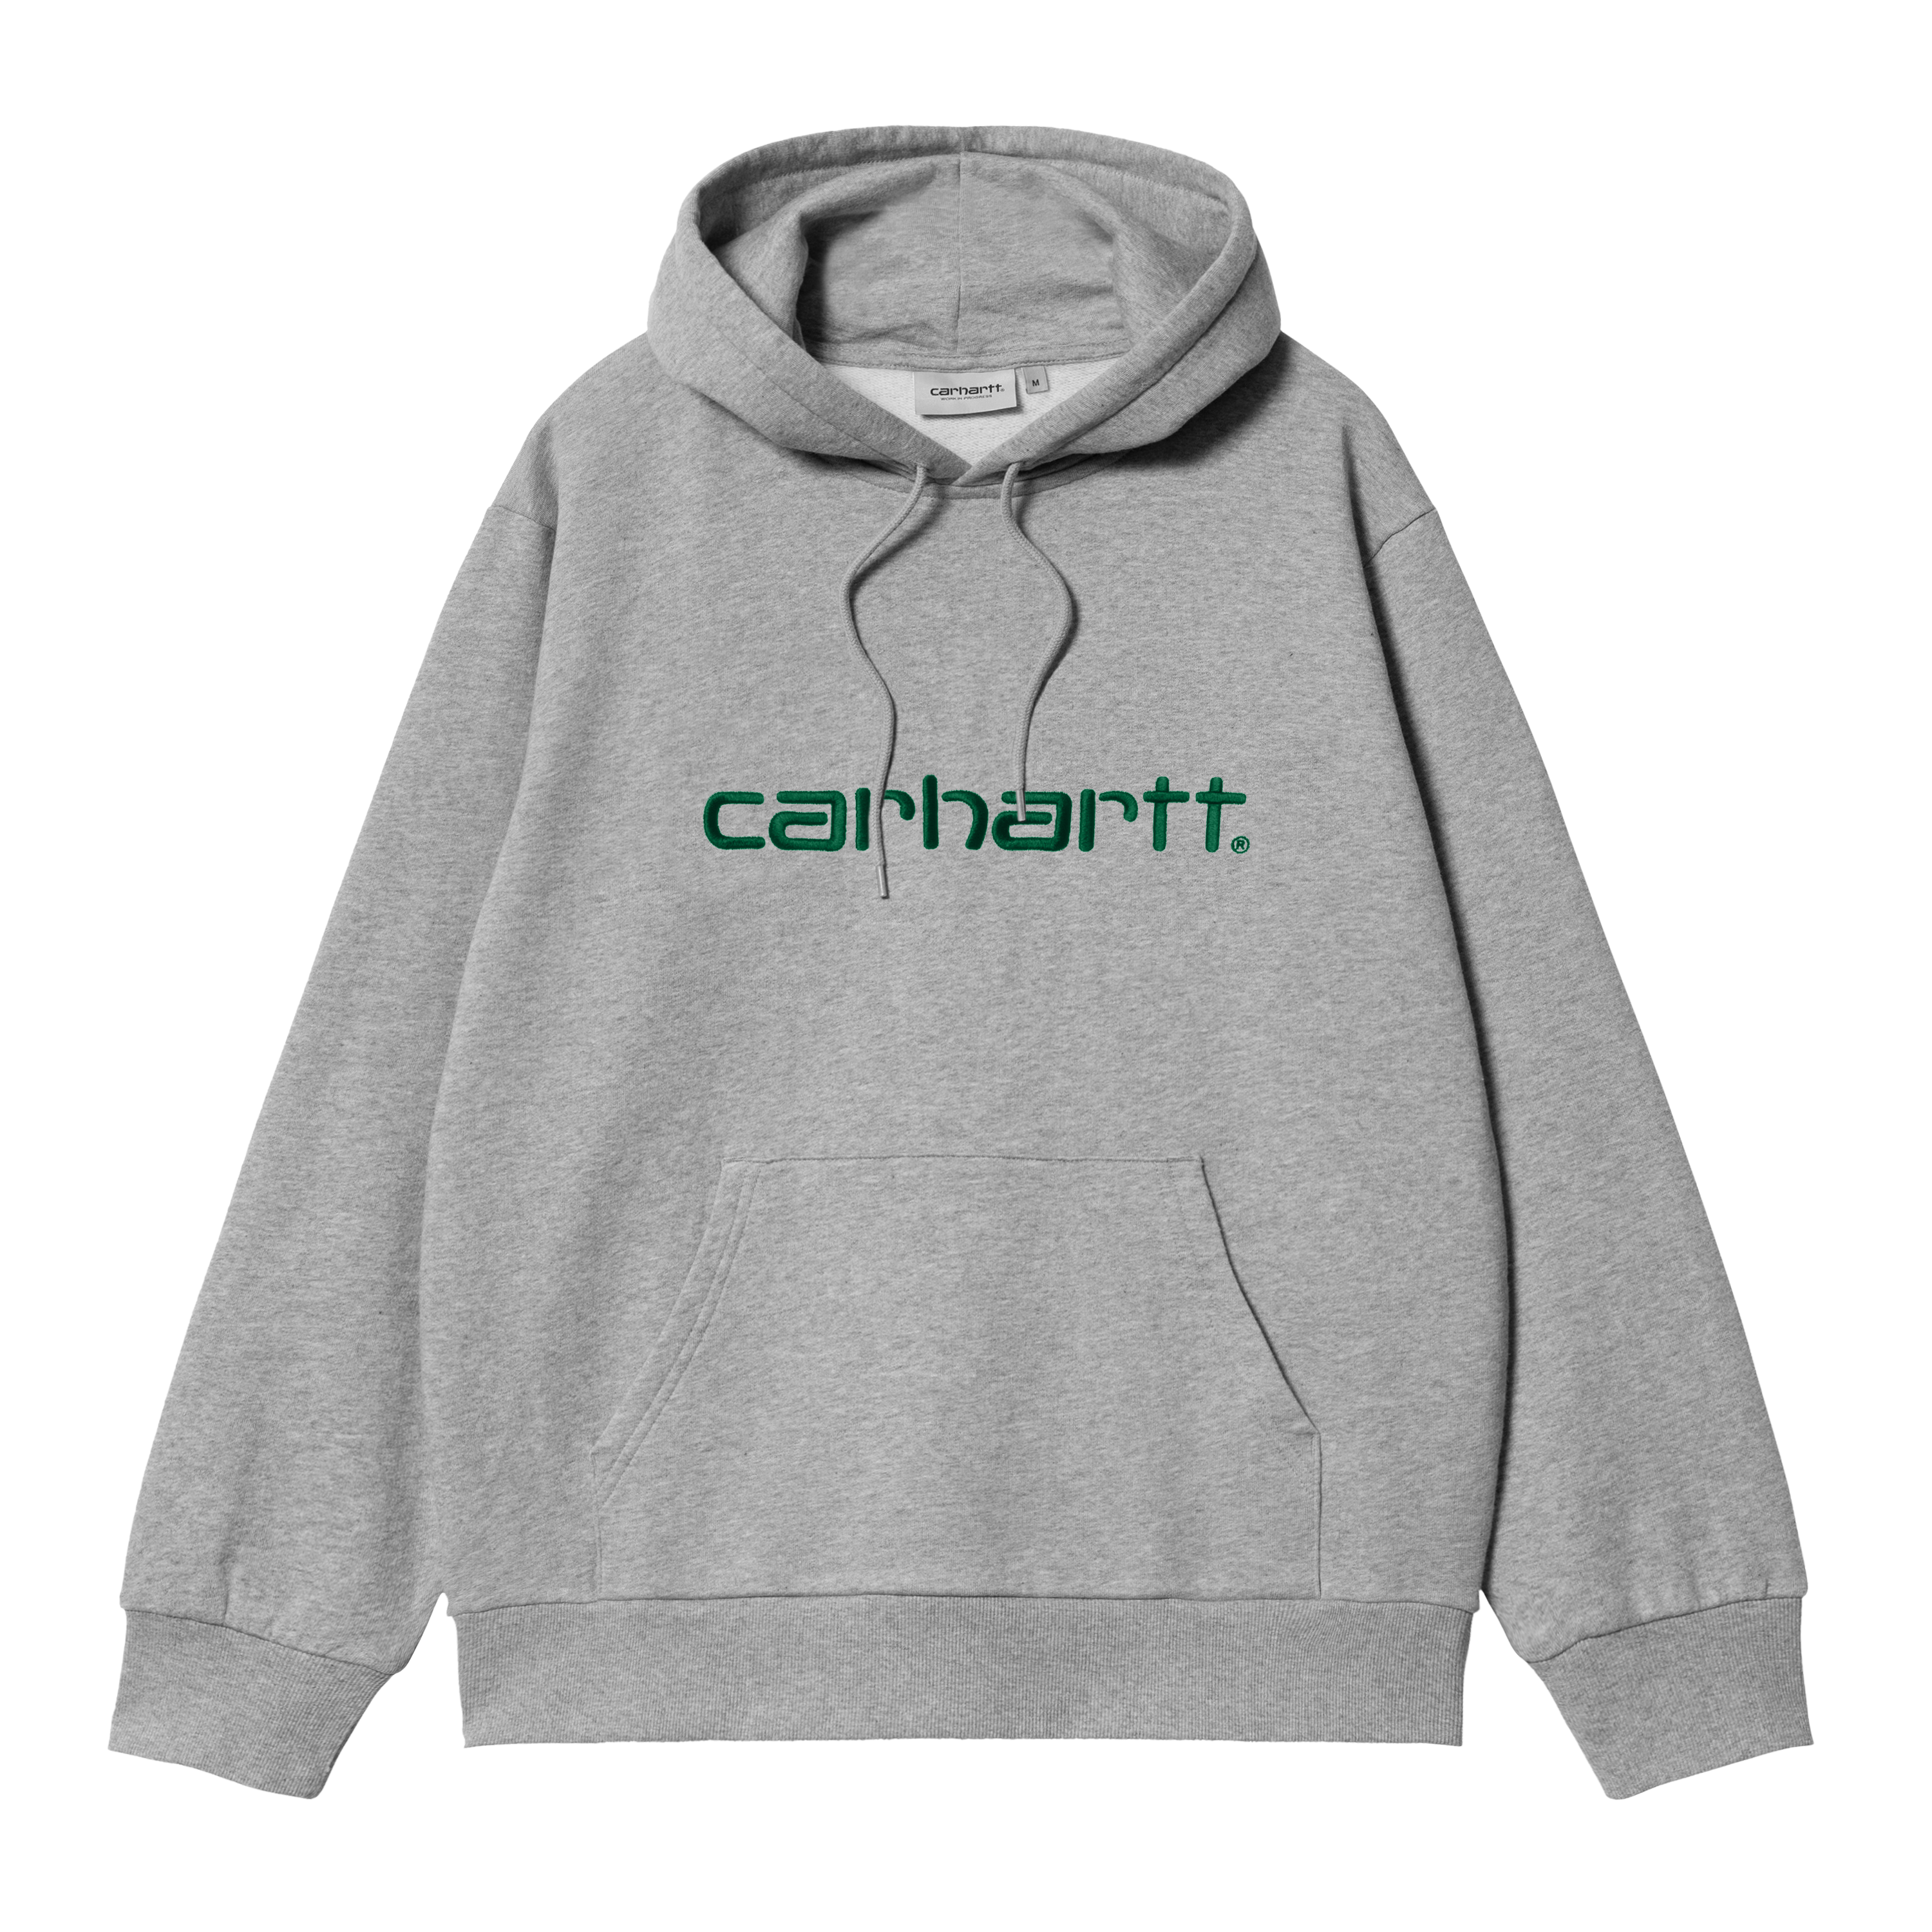 Carhartt WIP Hooded Carhartt Sweat Gris